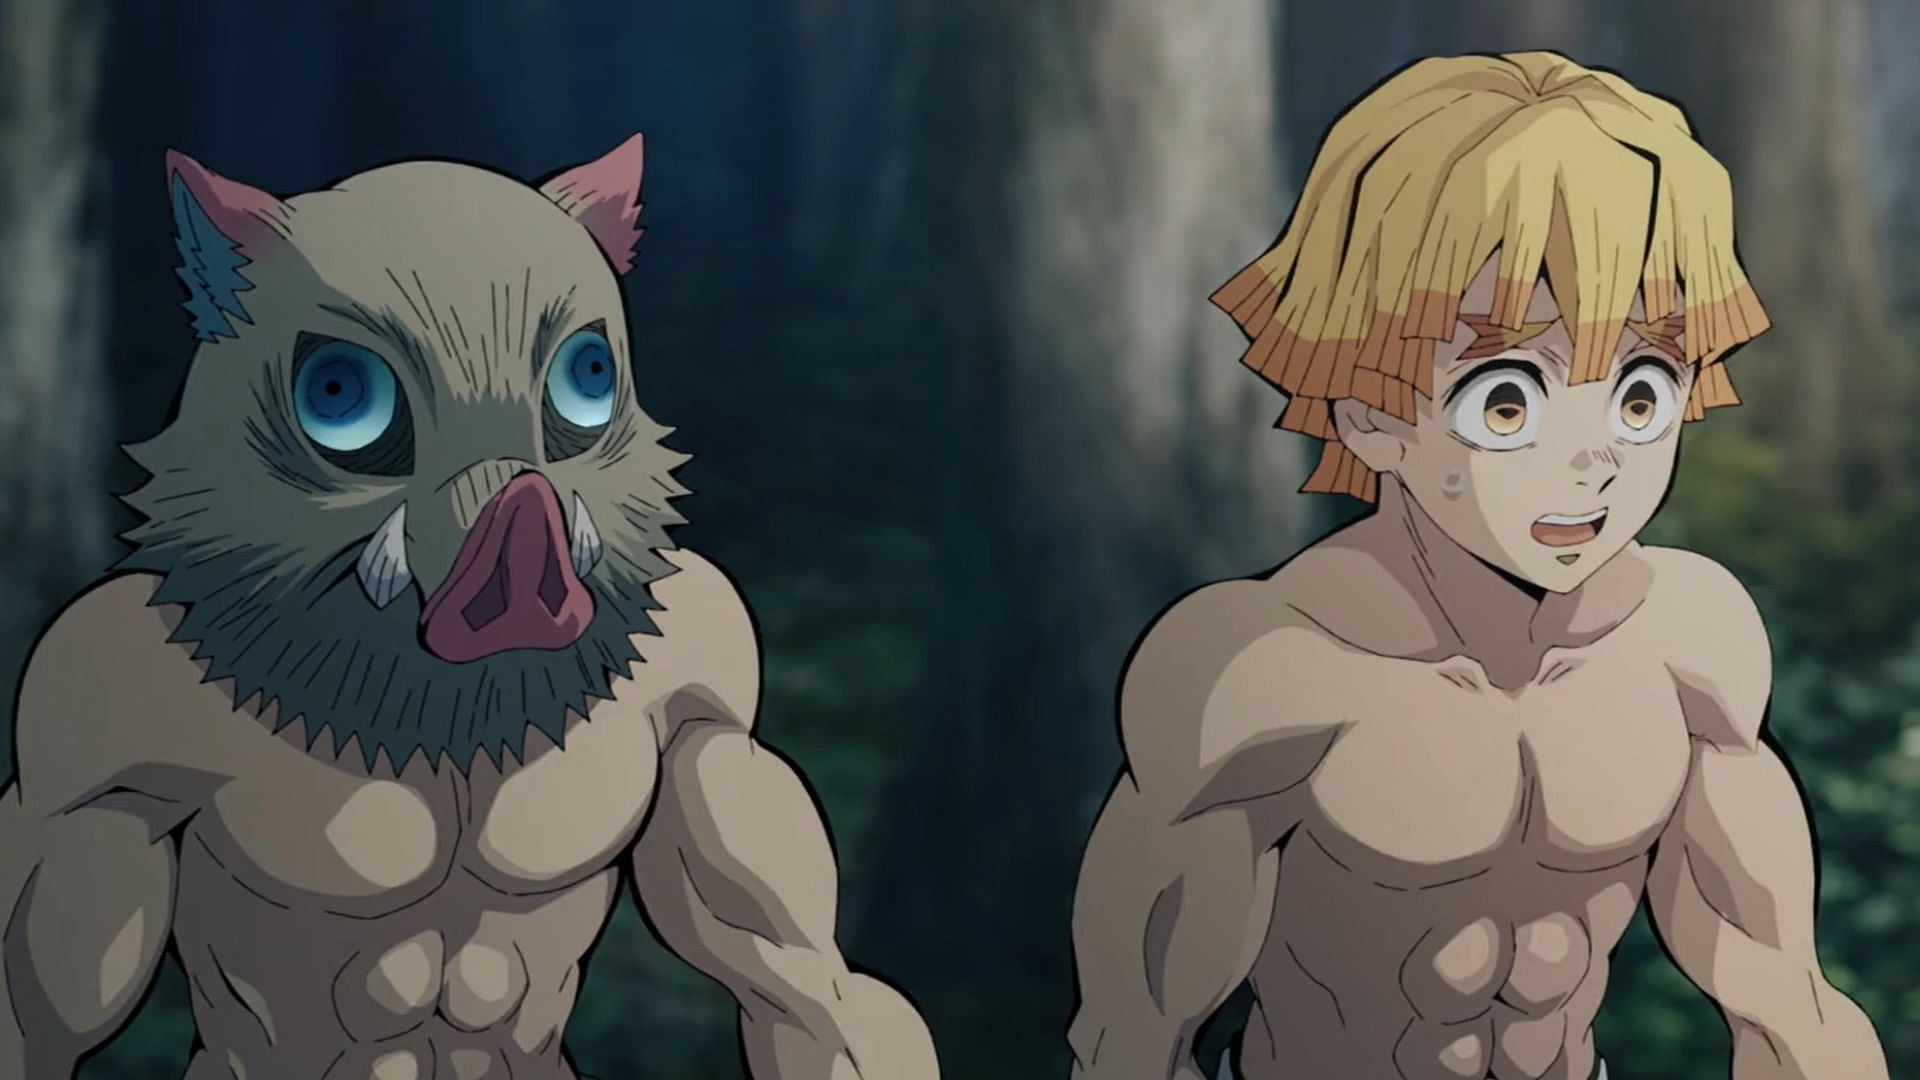 Inosuke and Zenitsu as seen in the Demon Slayer anime (Image via Ufotable)